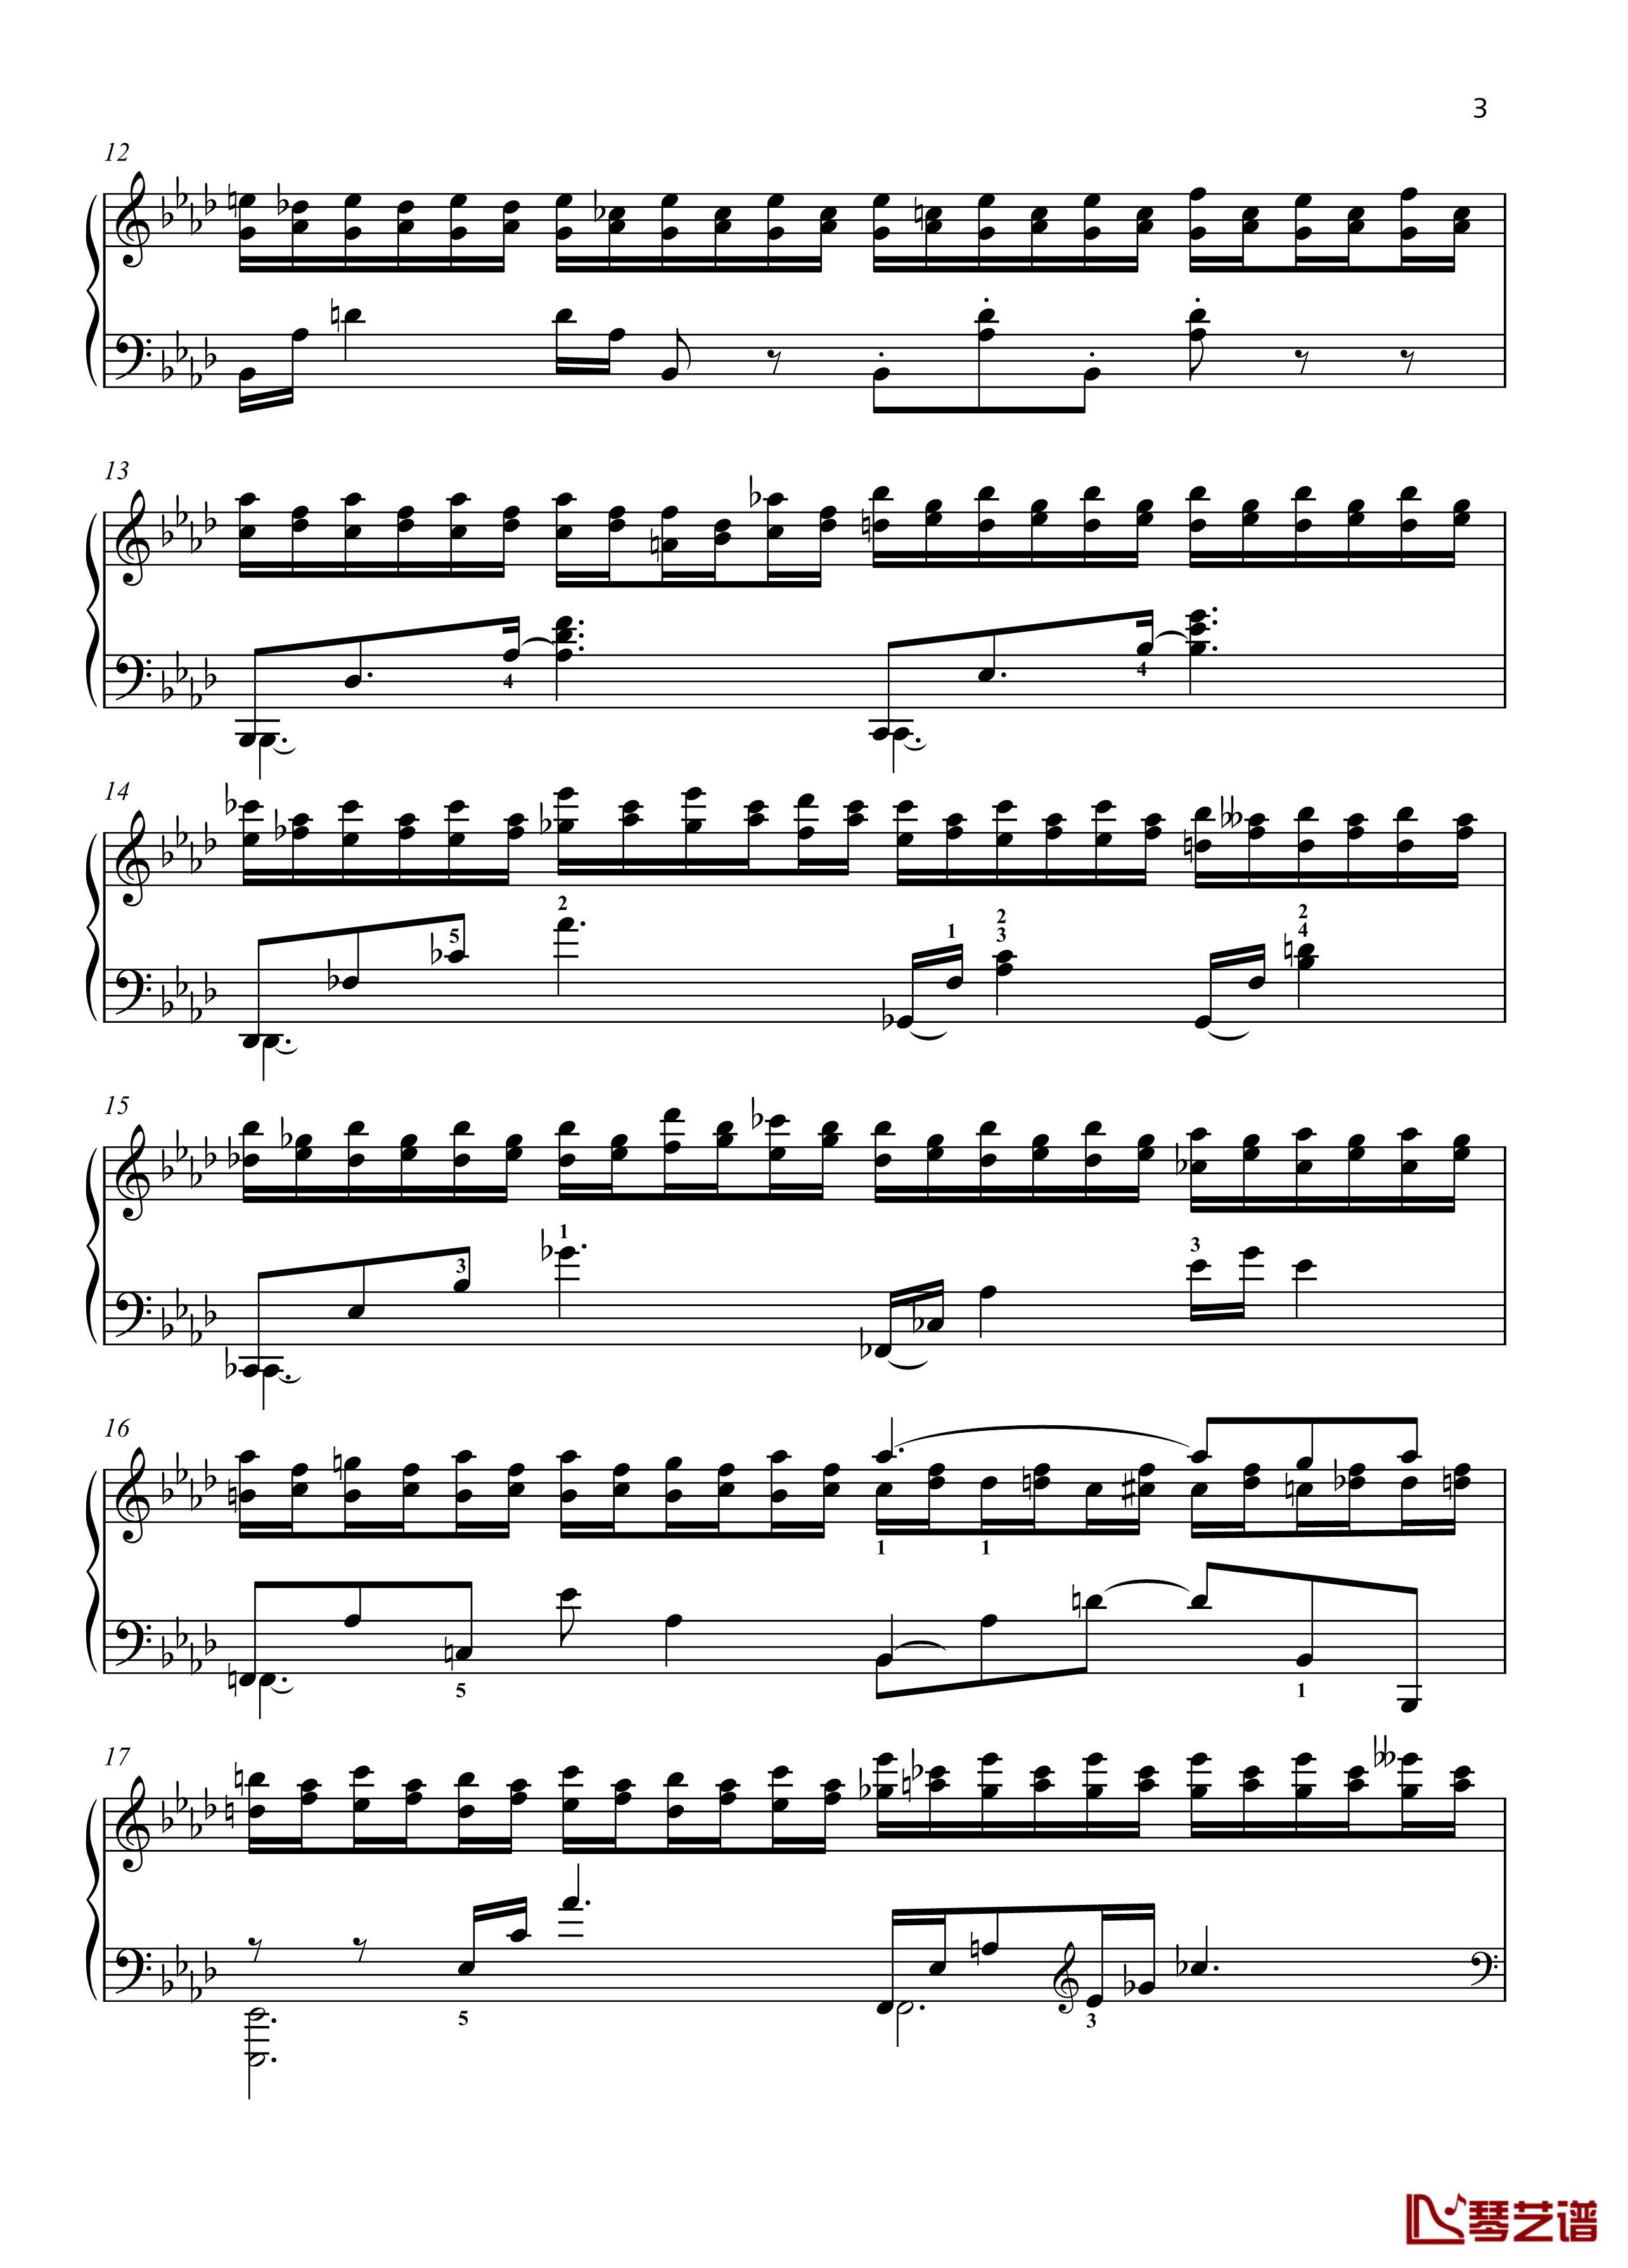 No. 2. Dream. Moderato钢琴谱-带指法- 八首音乐会练习曲 Eight Concert ?tudes Op 40 -爵士-尼古拉·凯帕斯汀3